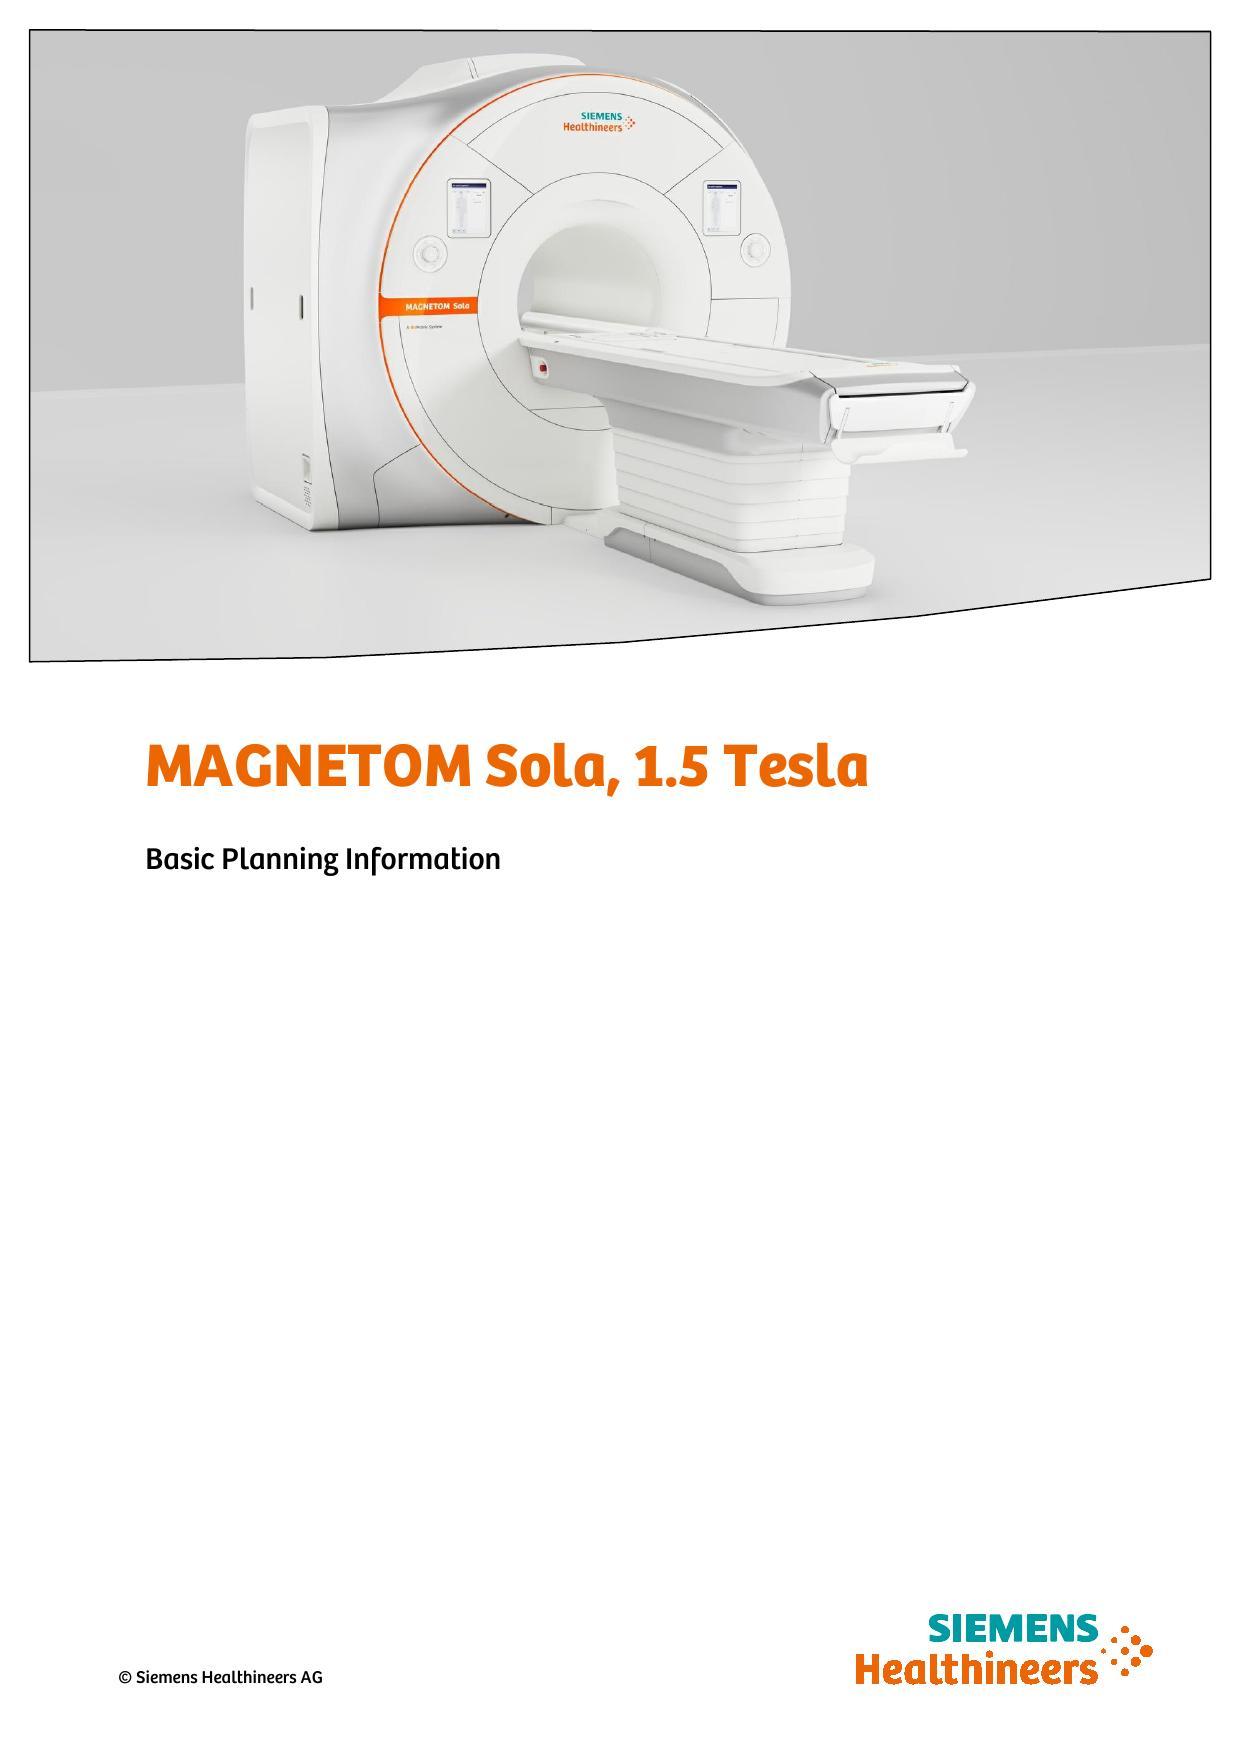 siemens-healthineers-magnetom-sola-basic-planning-information.pdf